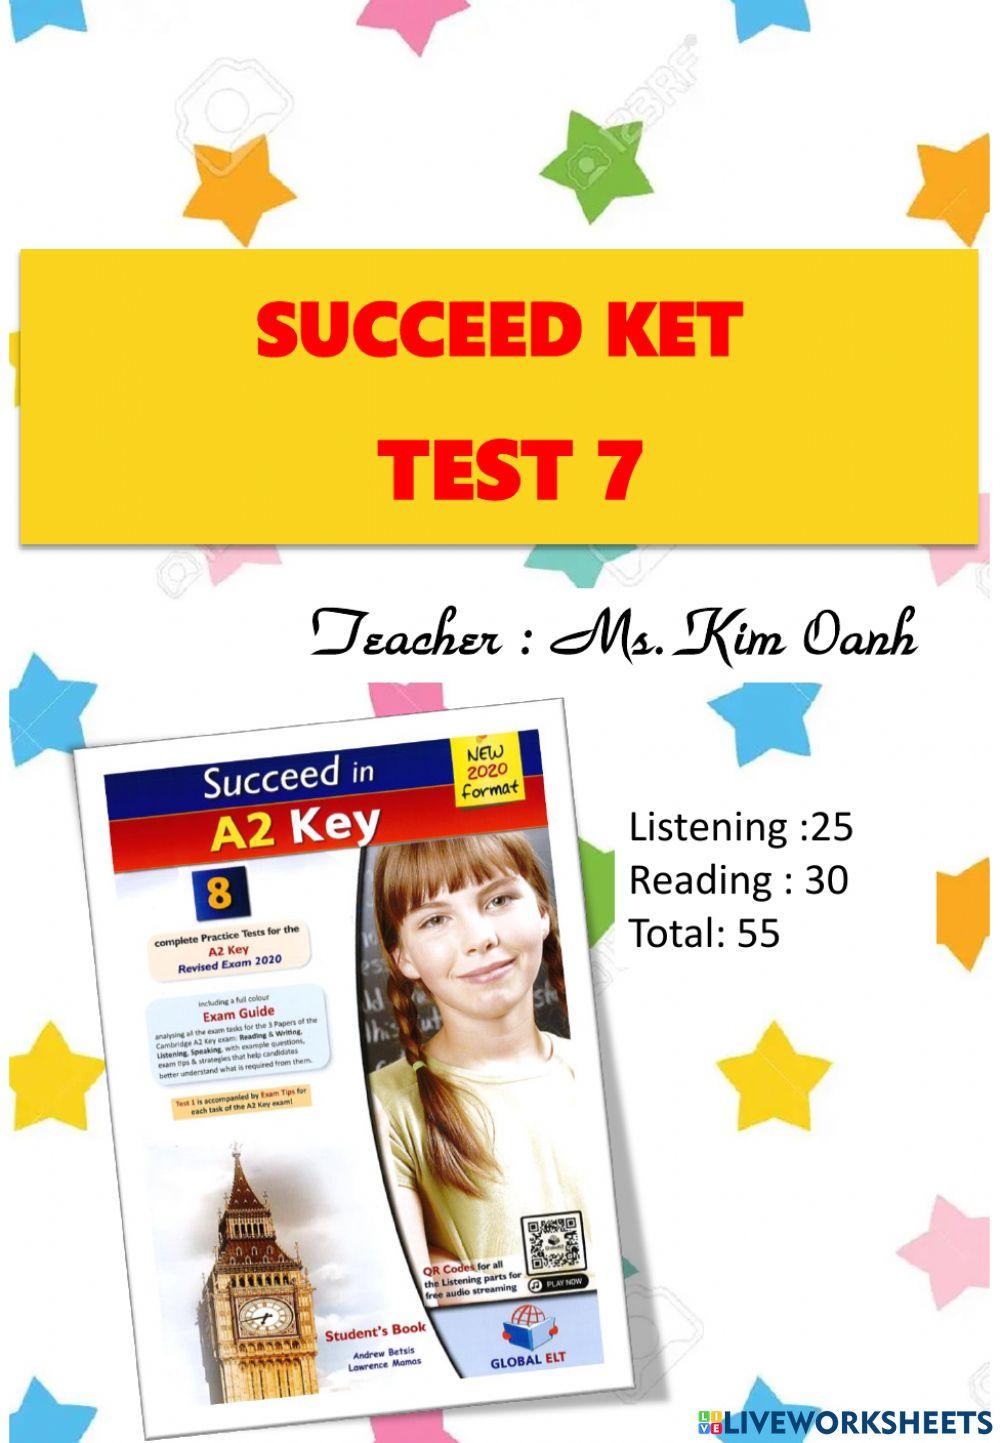 Succeed Ket Test 7